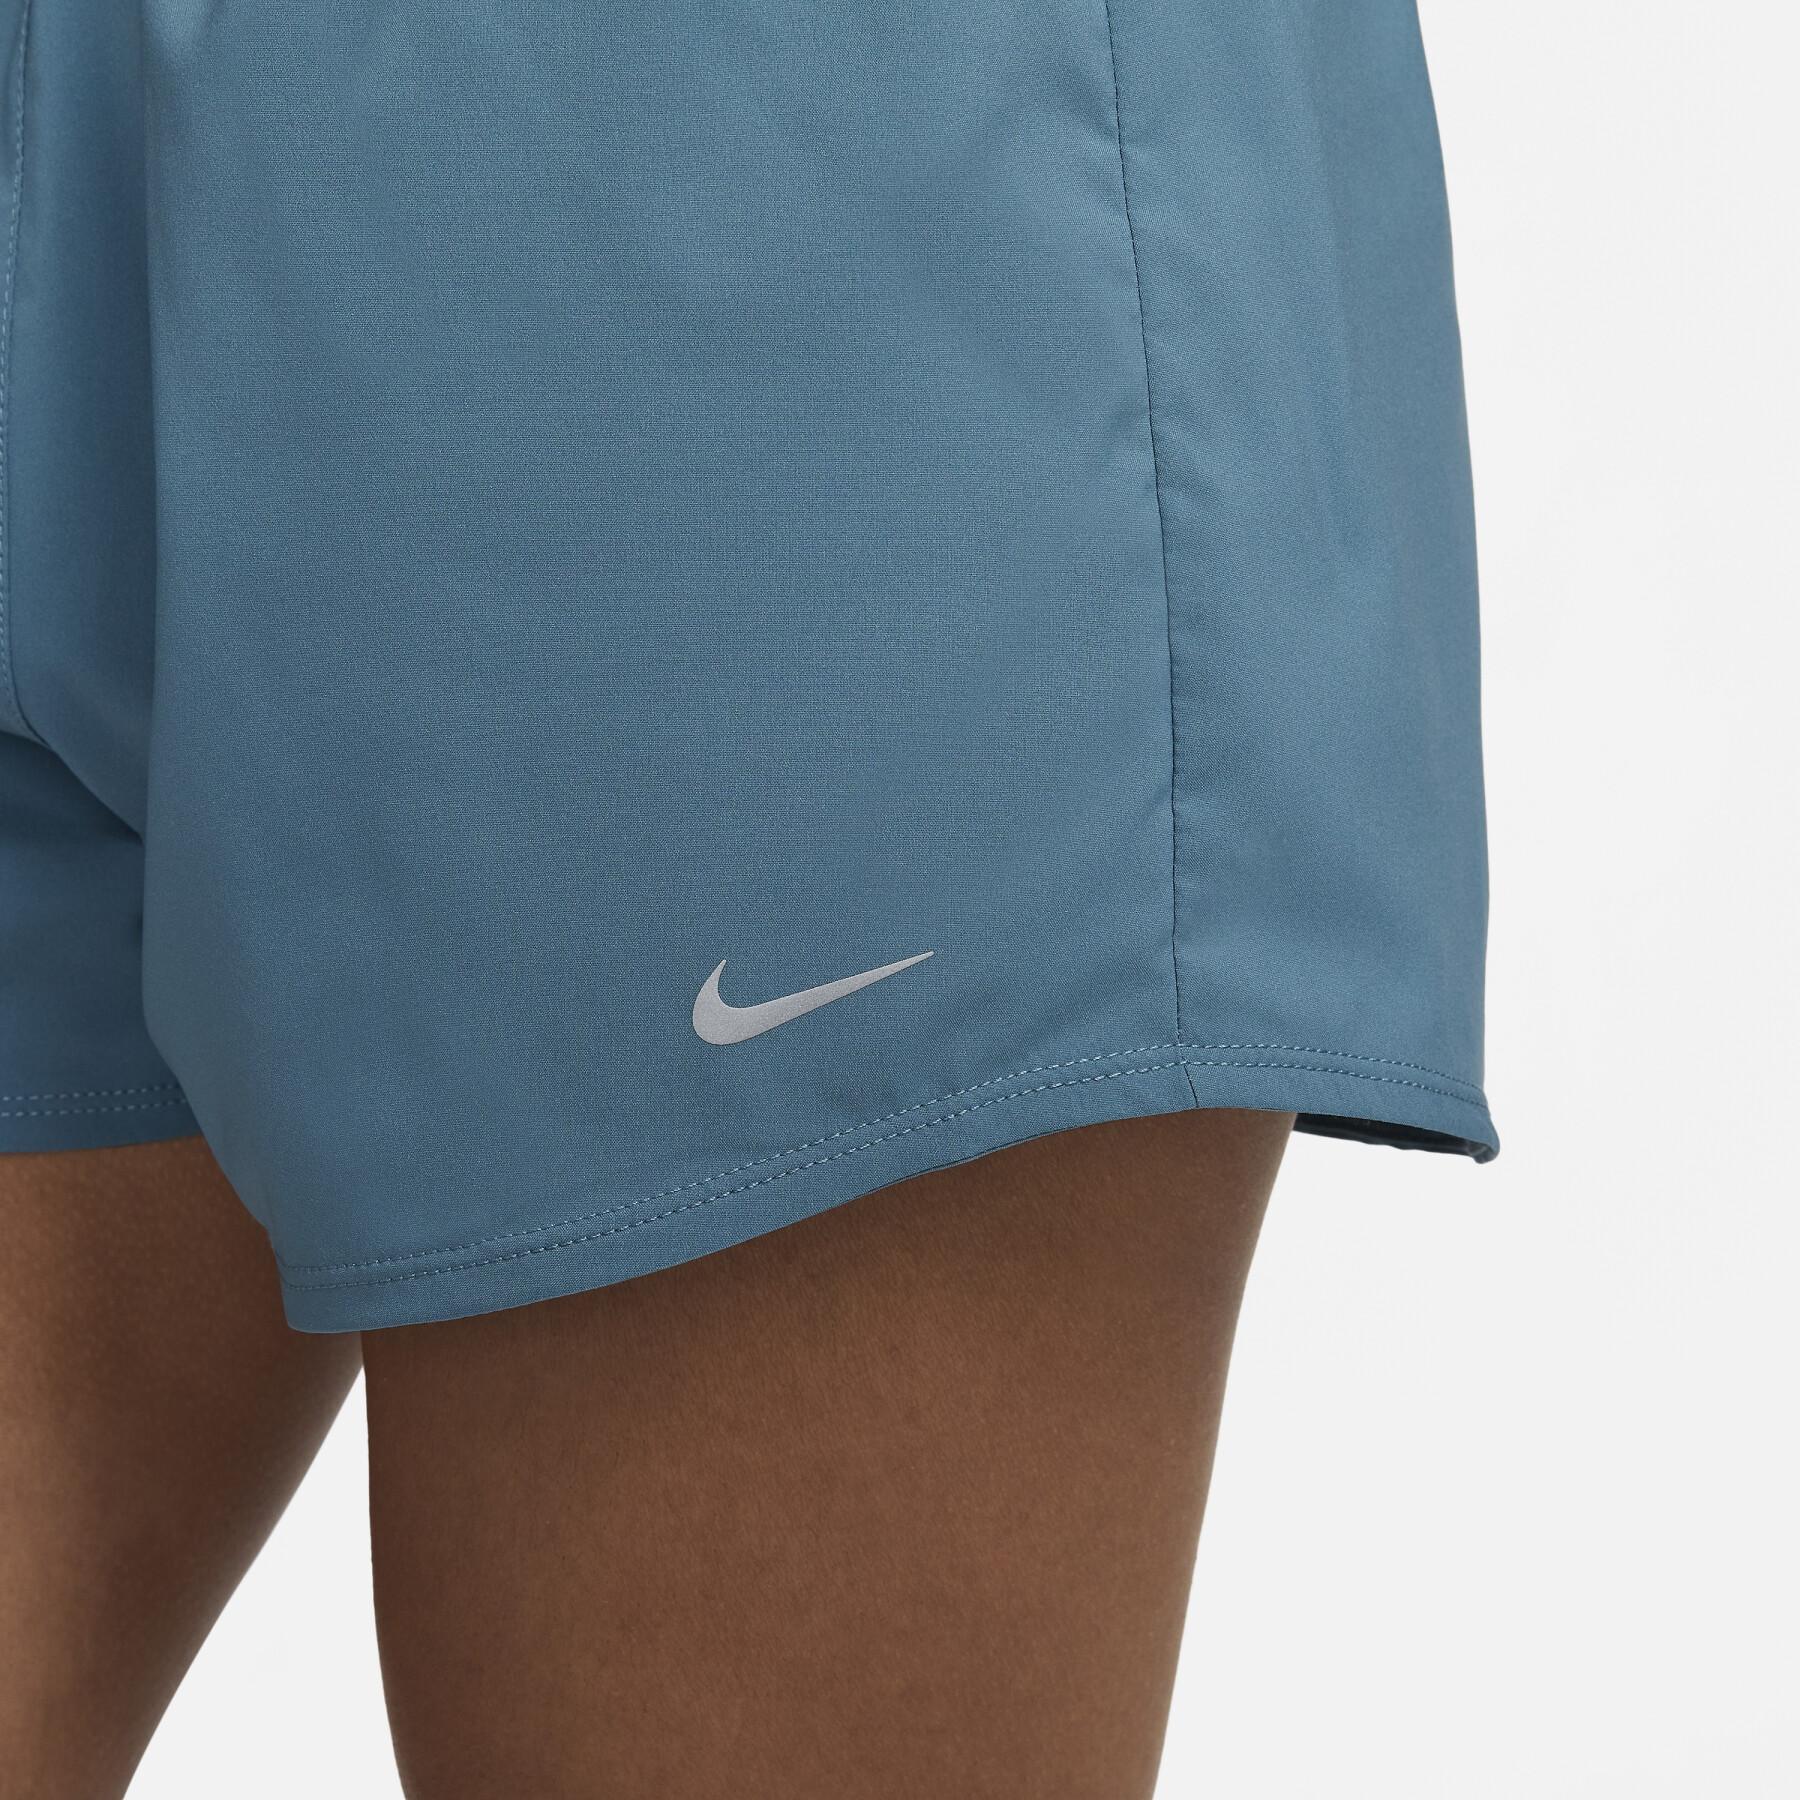 Pantalones cortos de mujer Nike One Dri-Fit HR 3 " BR